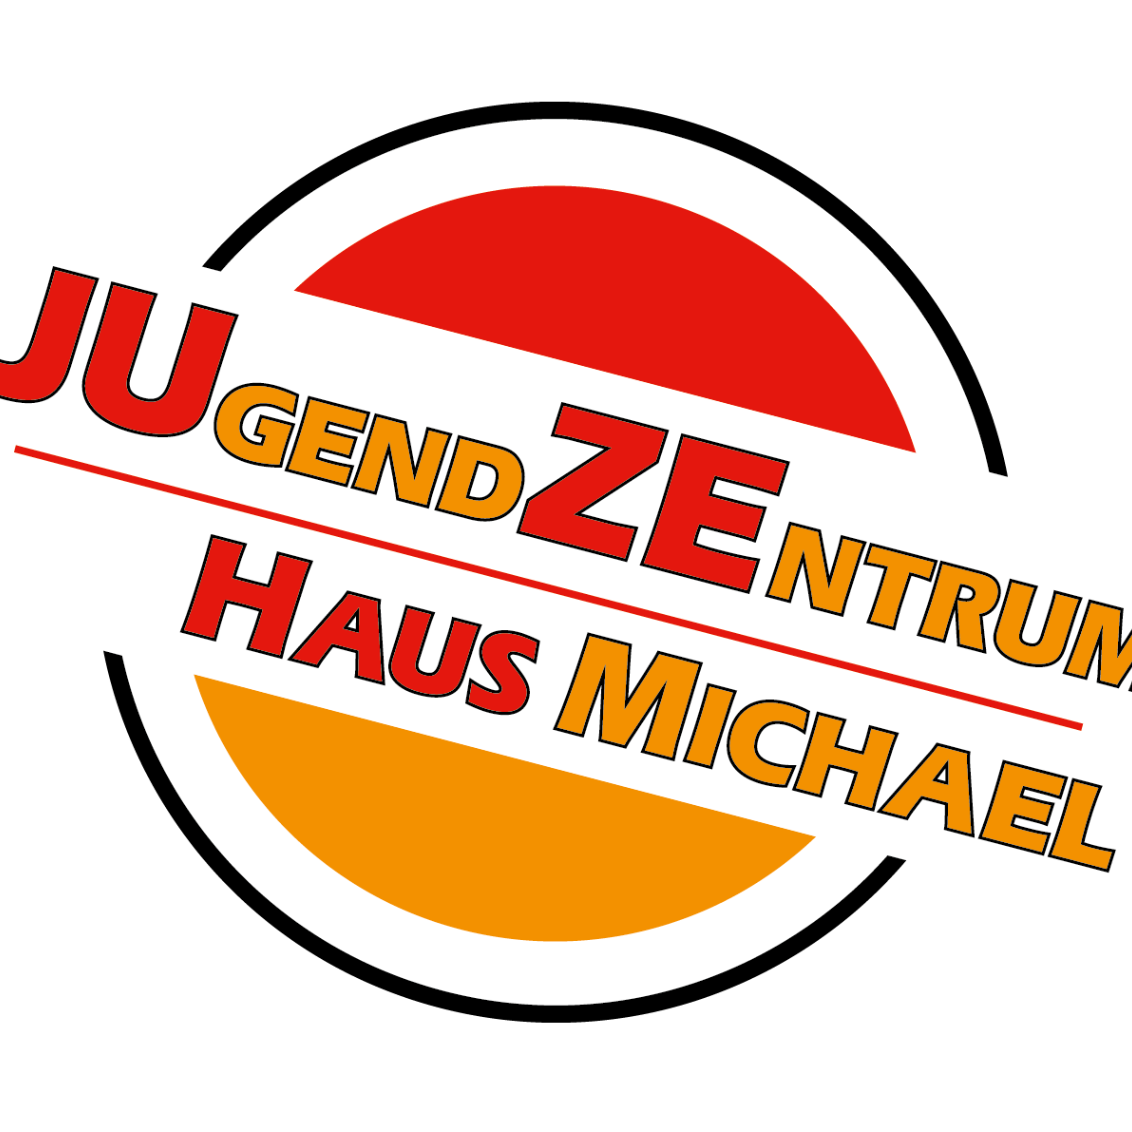 JUZE_haus_michael